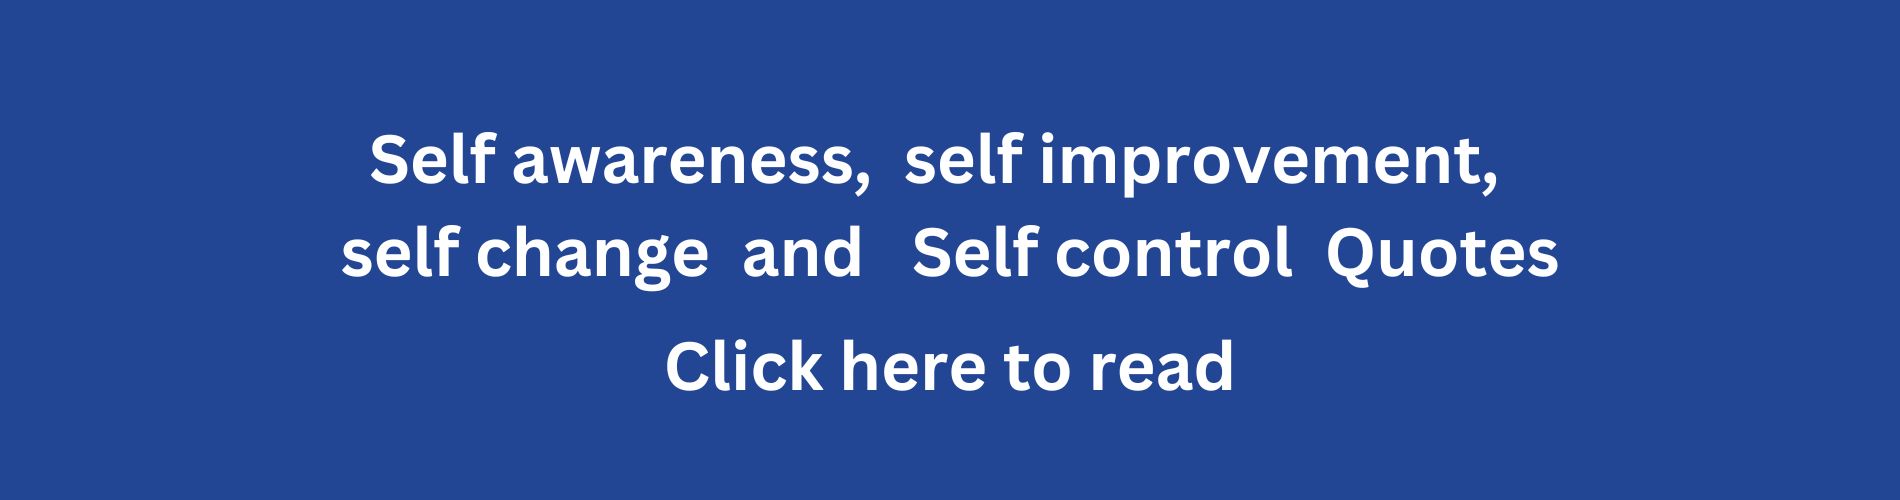 Self awareness, self improvement, self change & Self control quotes.